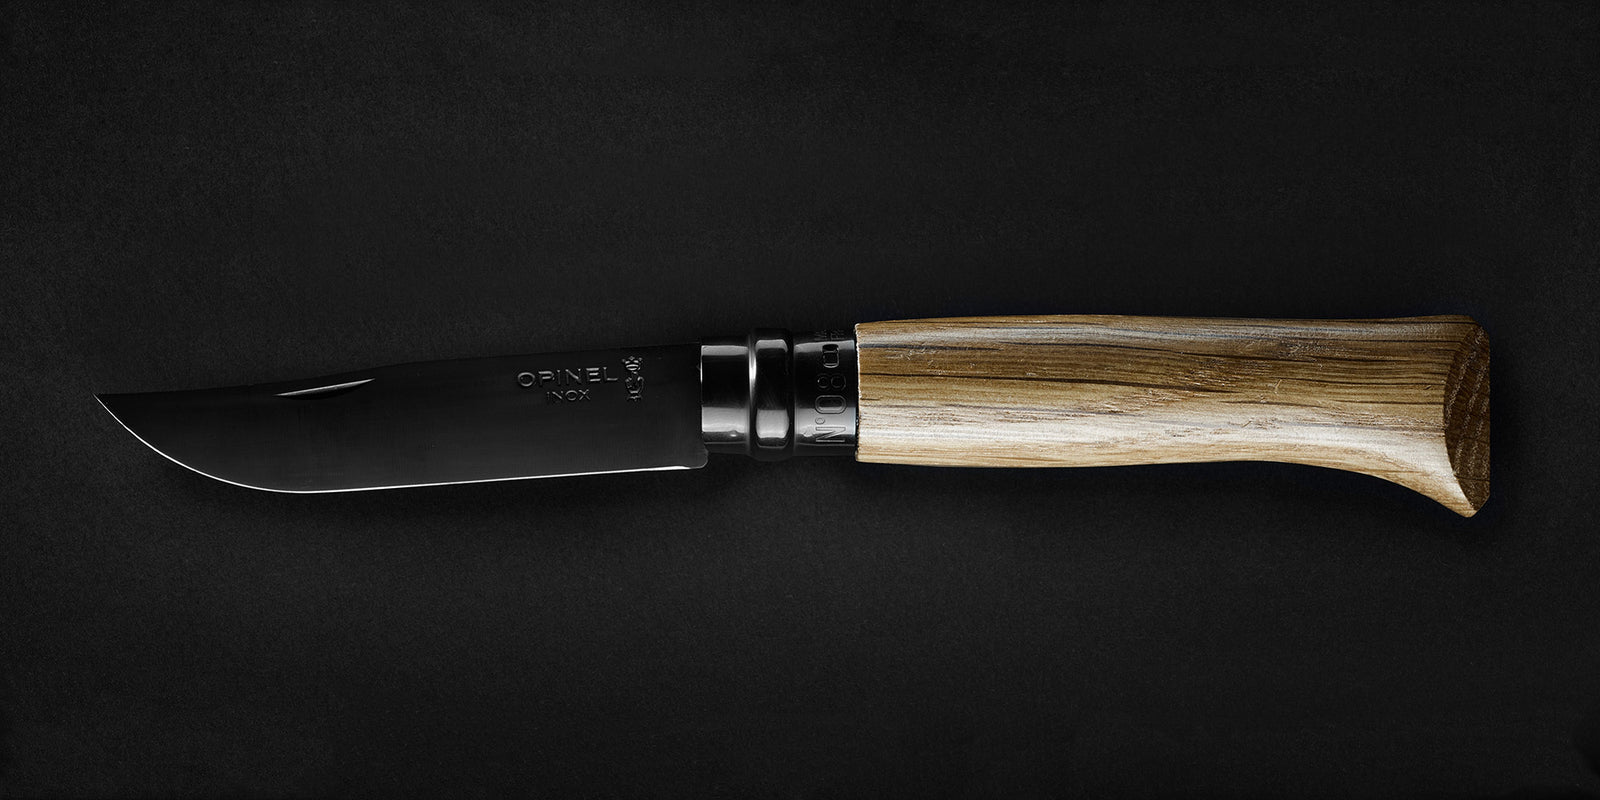 Opinel No8 Black Folding Knife with Oak Handle on Food52